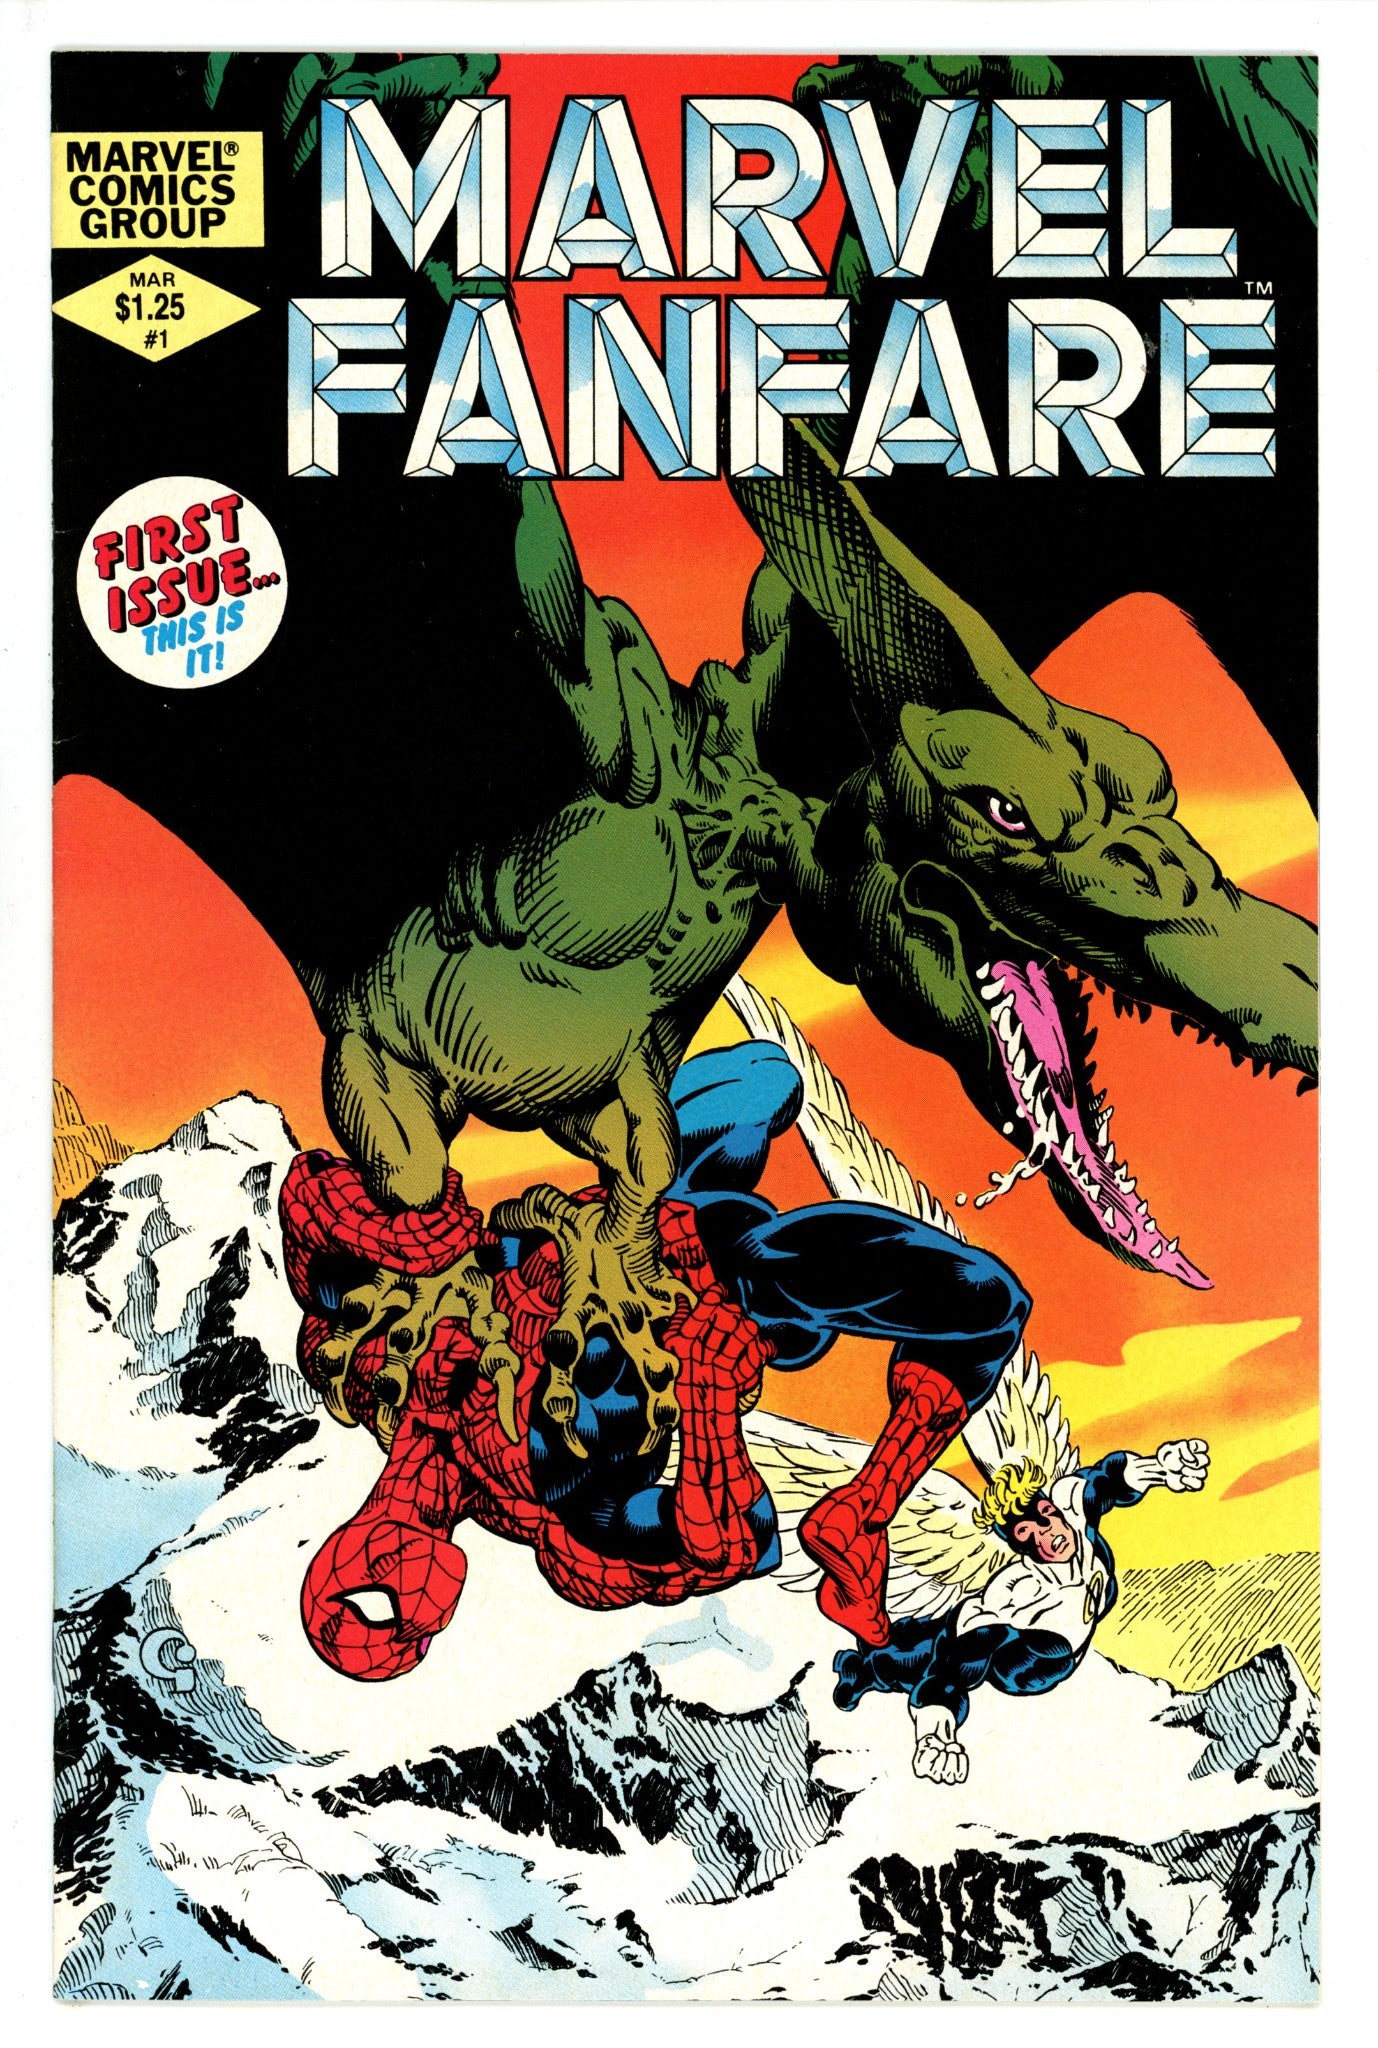 Marvel Fanfare Vol 1 1 (1981)